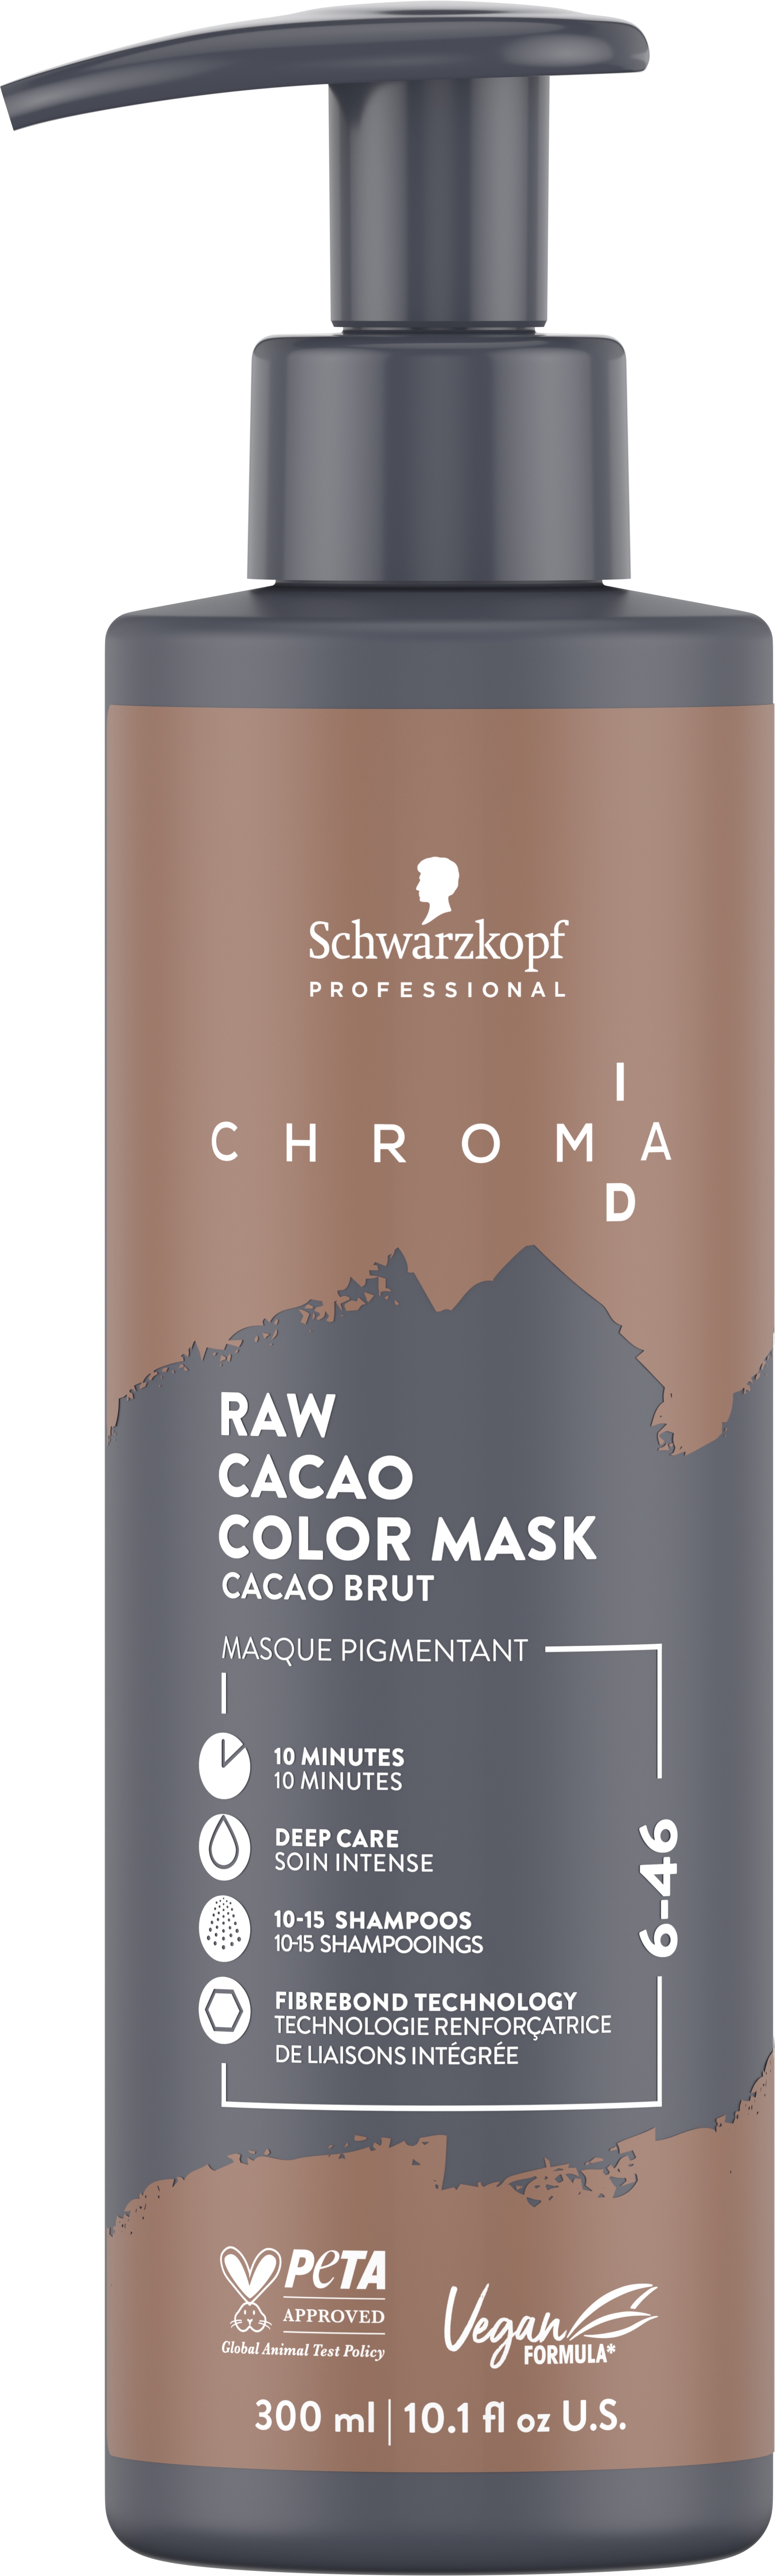 Image du produit de Chroma ID - Bonding Color Mask 6-46 Raw Cacao